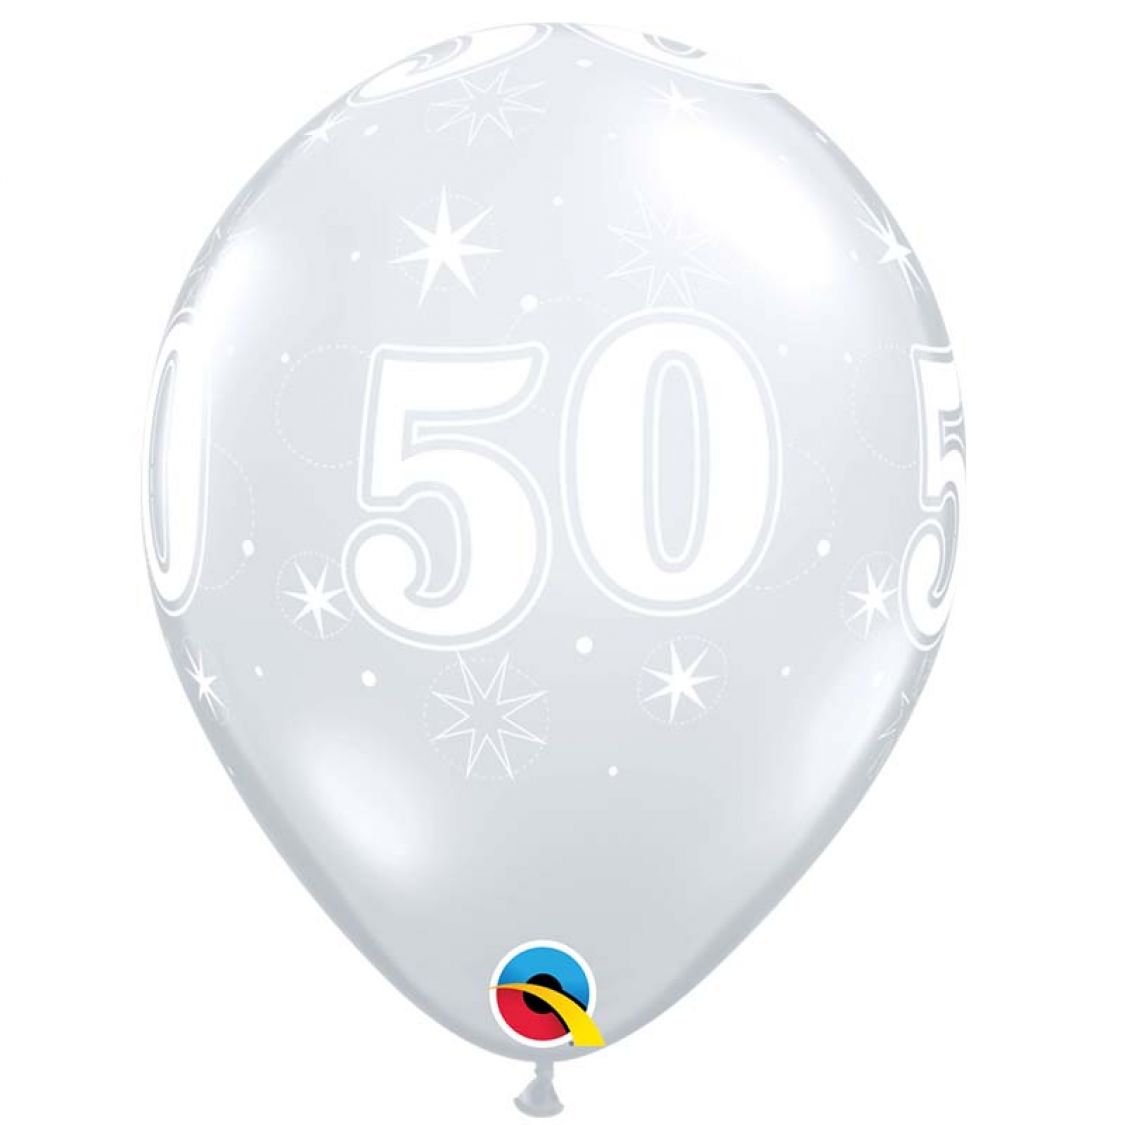 Ballons mylar argent chiffre 50 ans